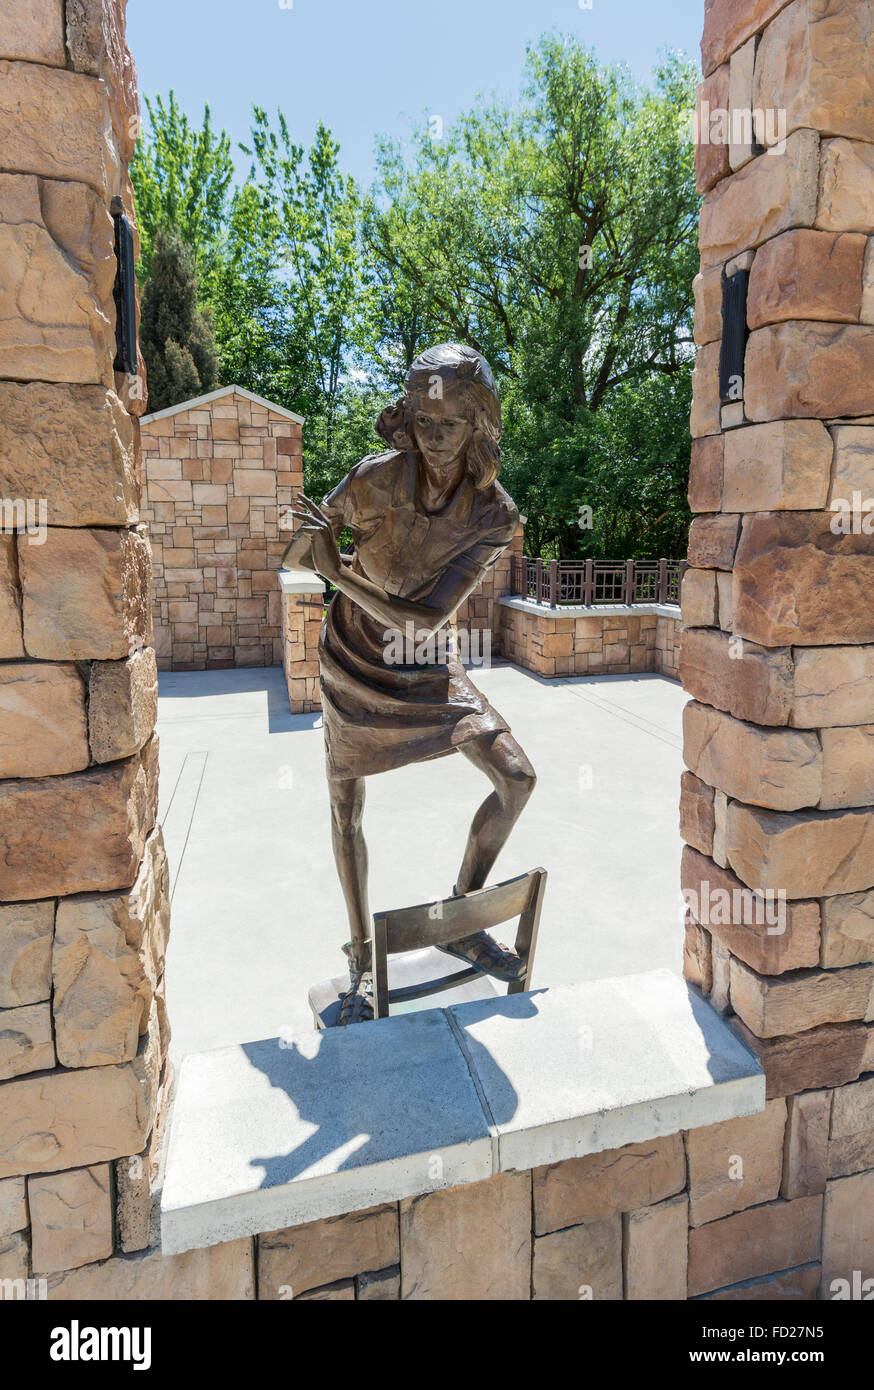 New York, Boise, Idaho Anne Frank Human Rights Memorial, life size sculpture en bronze de Frank holding diary Banque D'Images